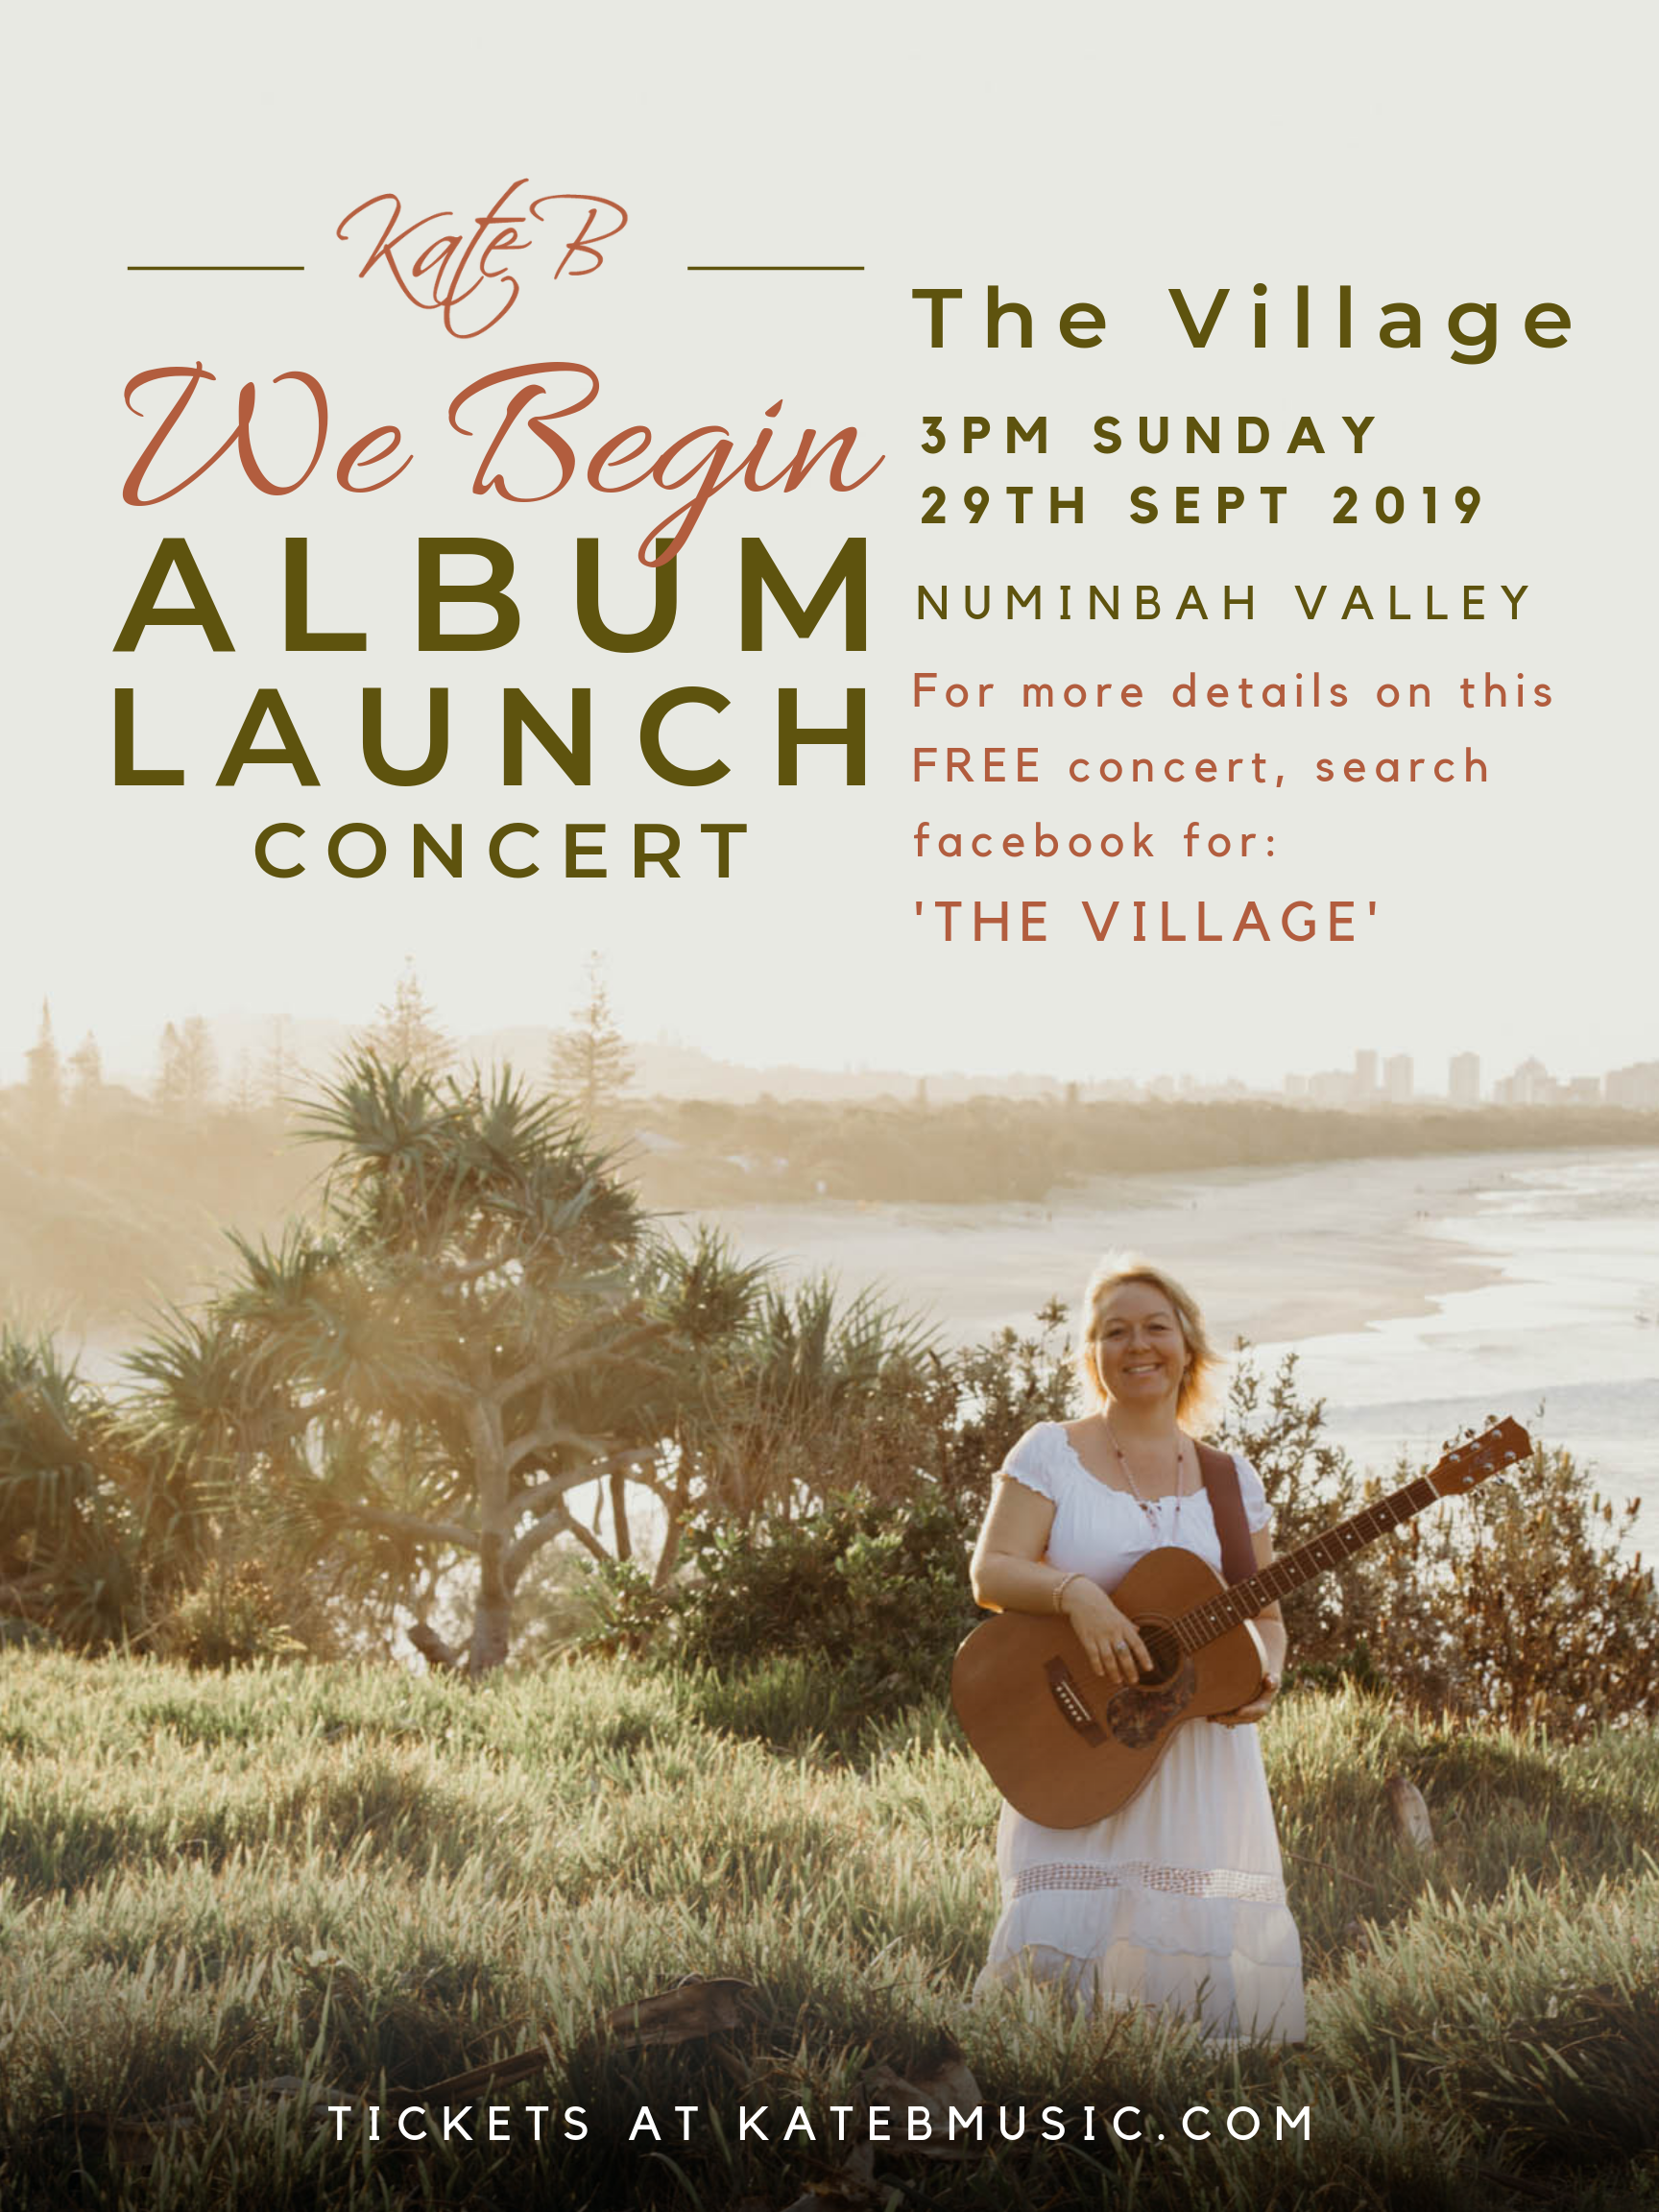 We Begin Album Launch - The Village